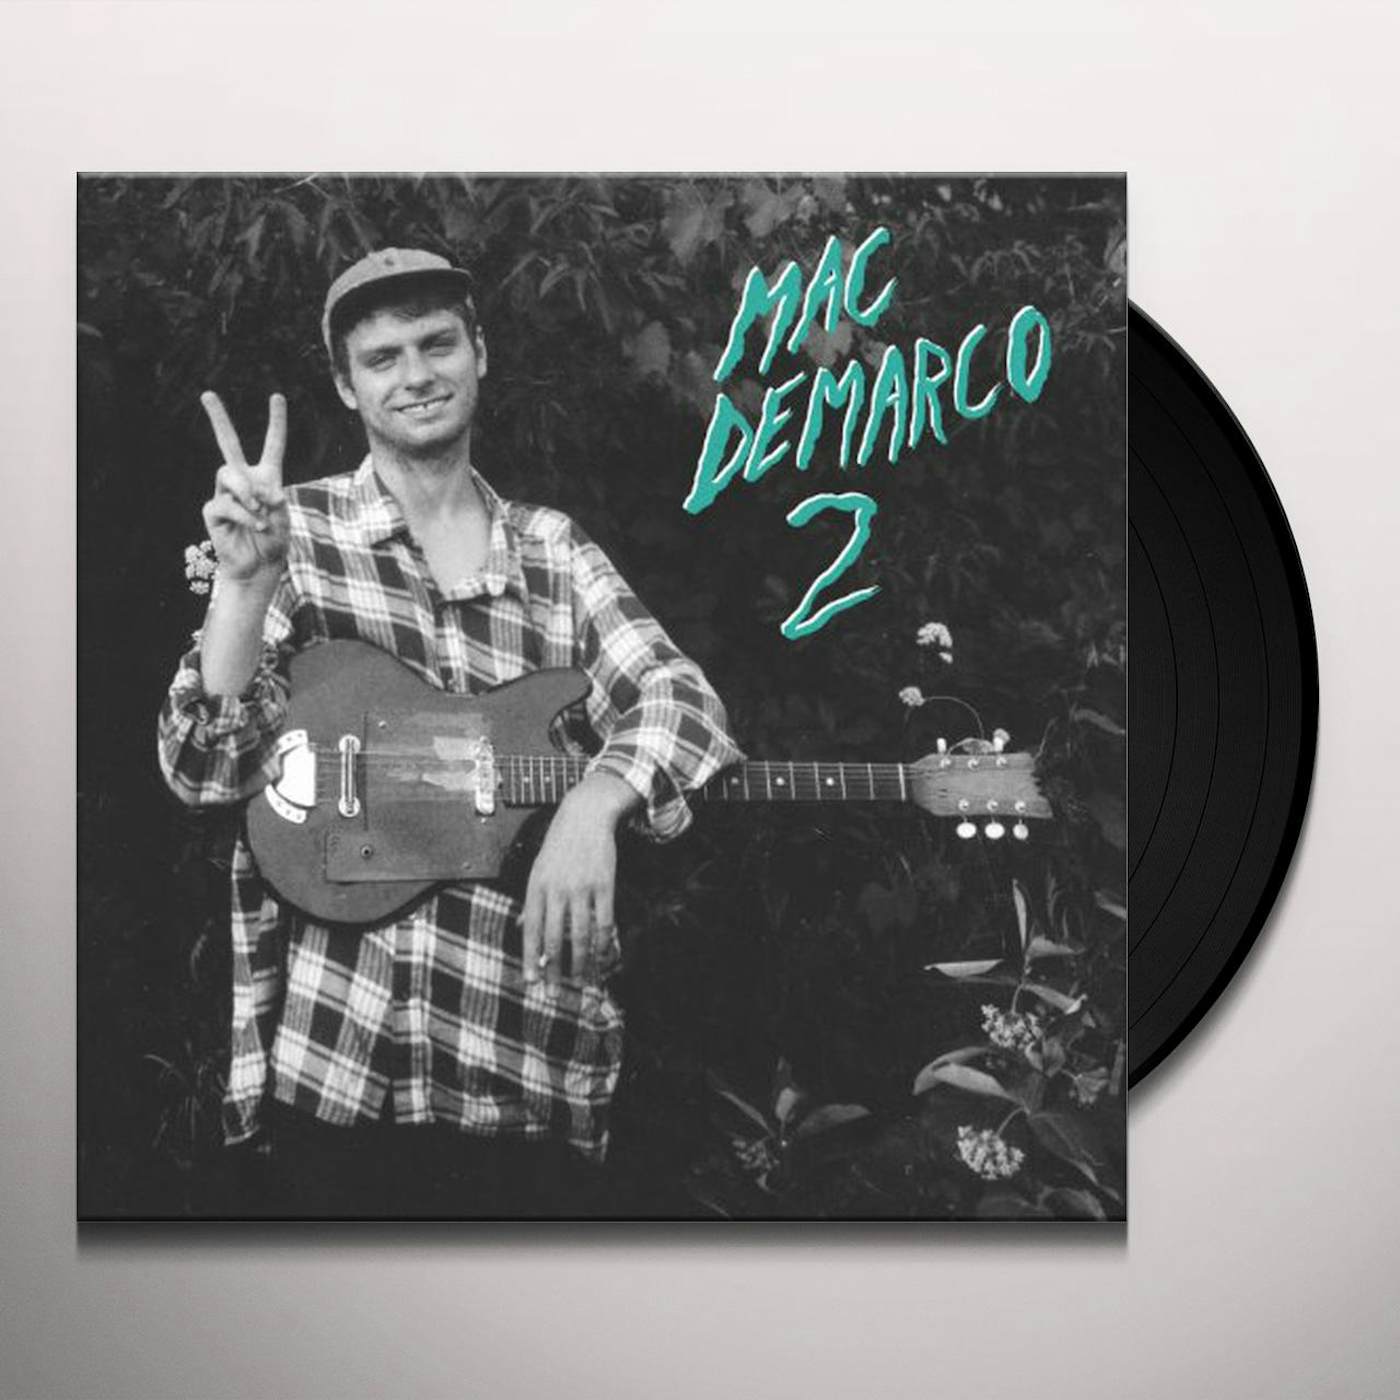 Mac DeMarco Here Comes The Cowboy Vinyl Record